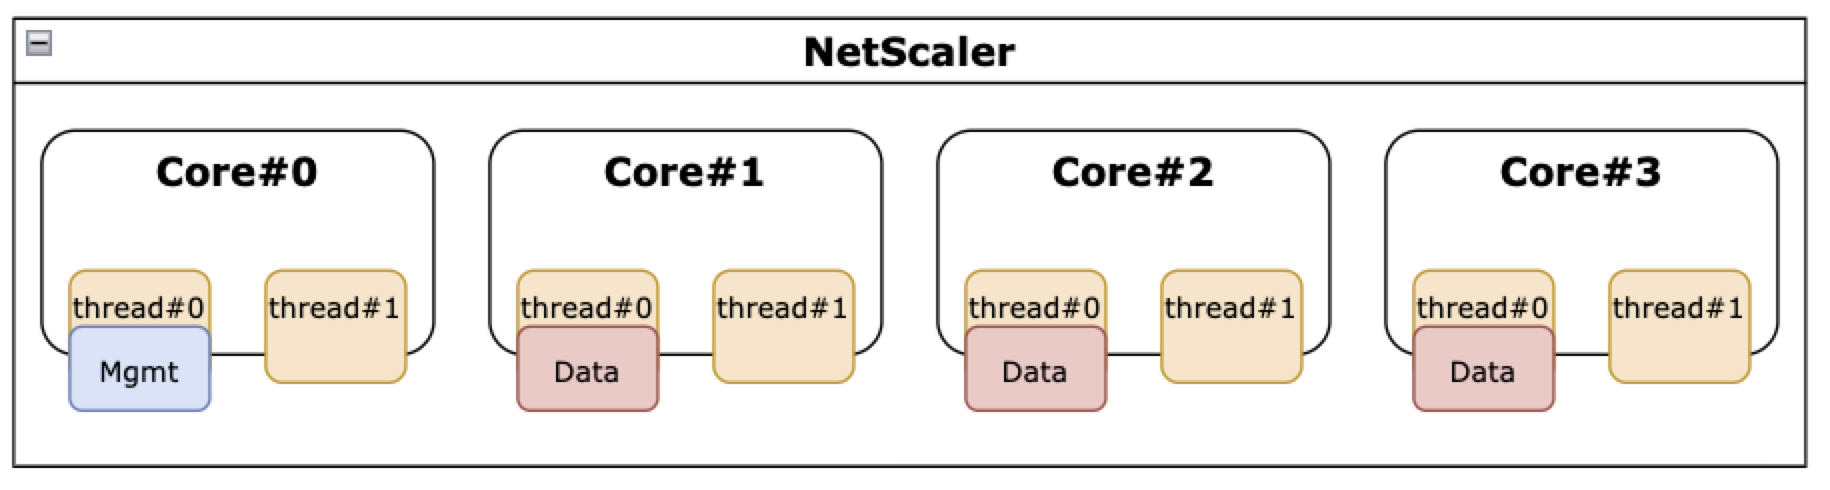 NetScaler mit deaktivierter SMT-Funktion